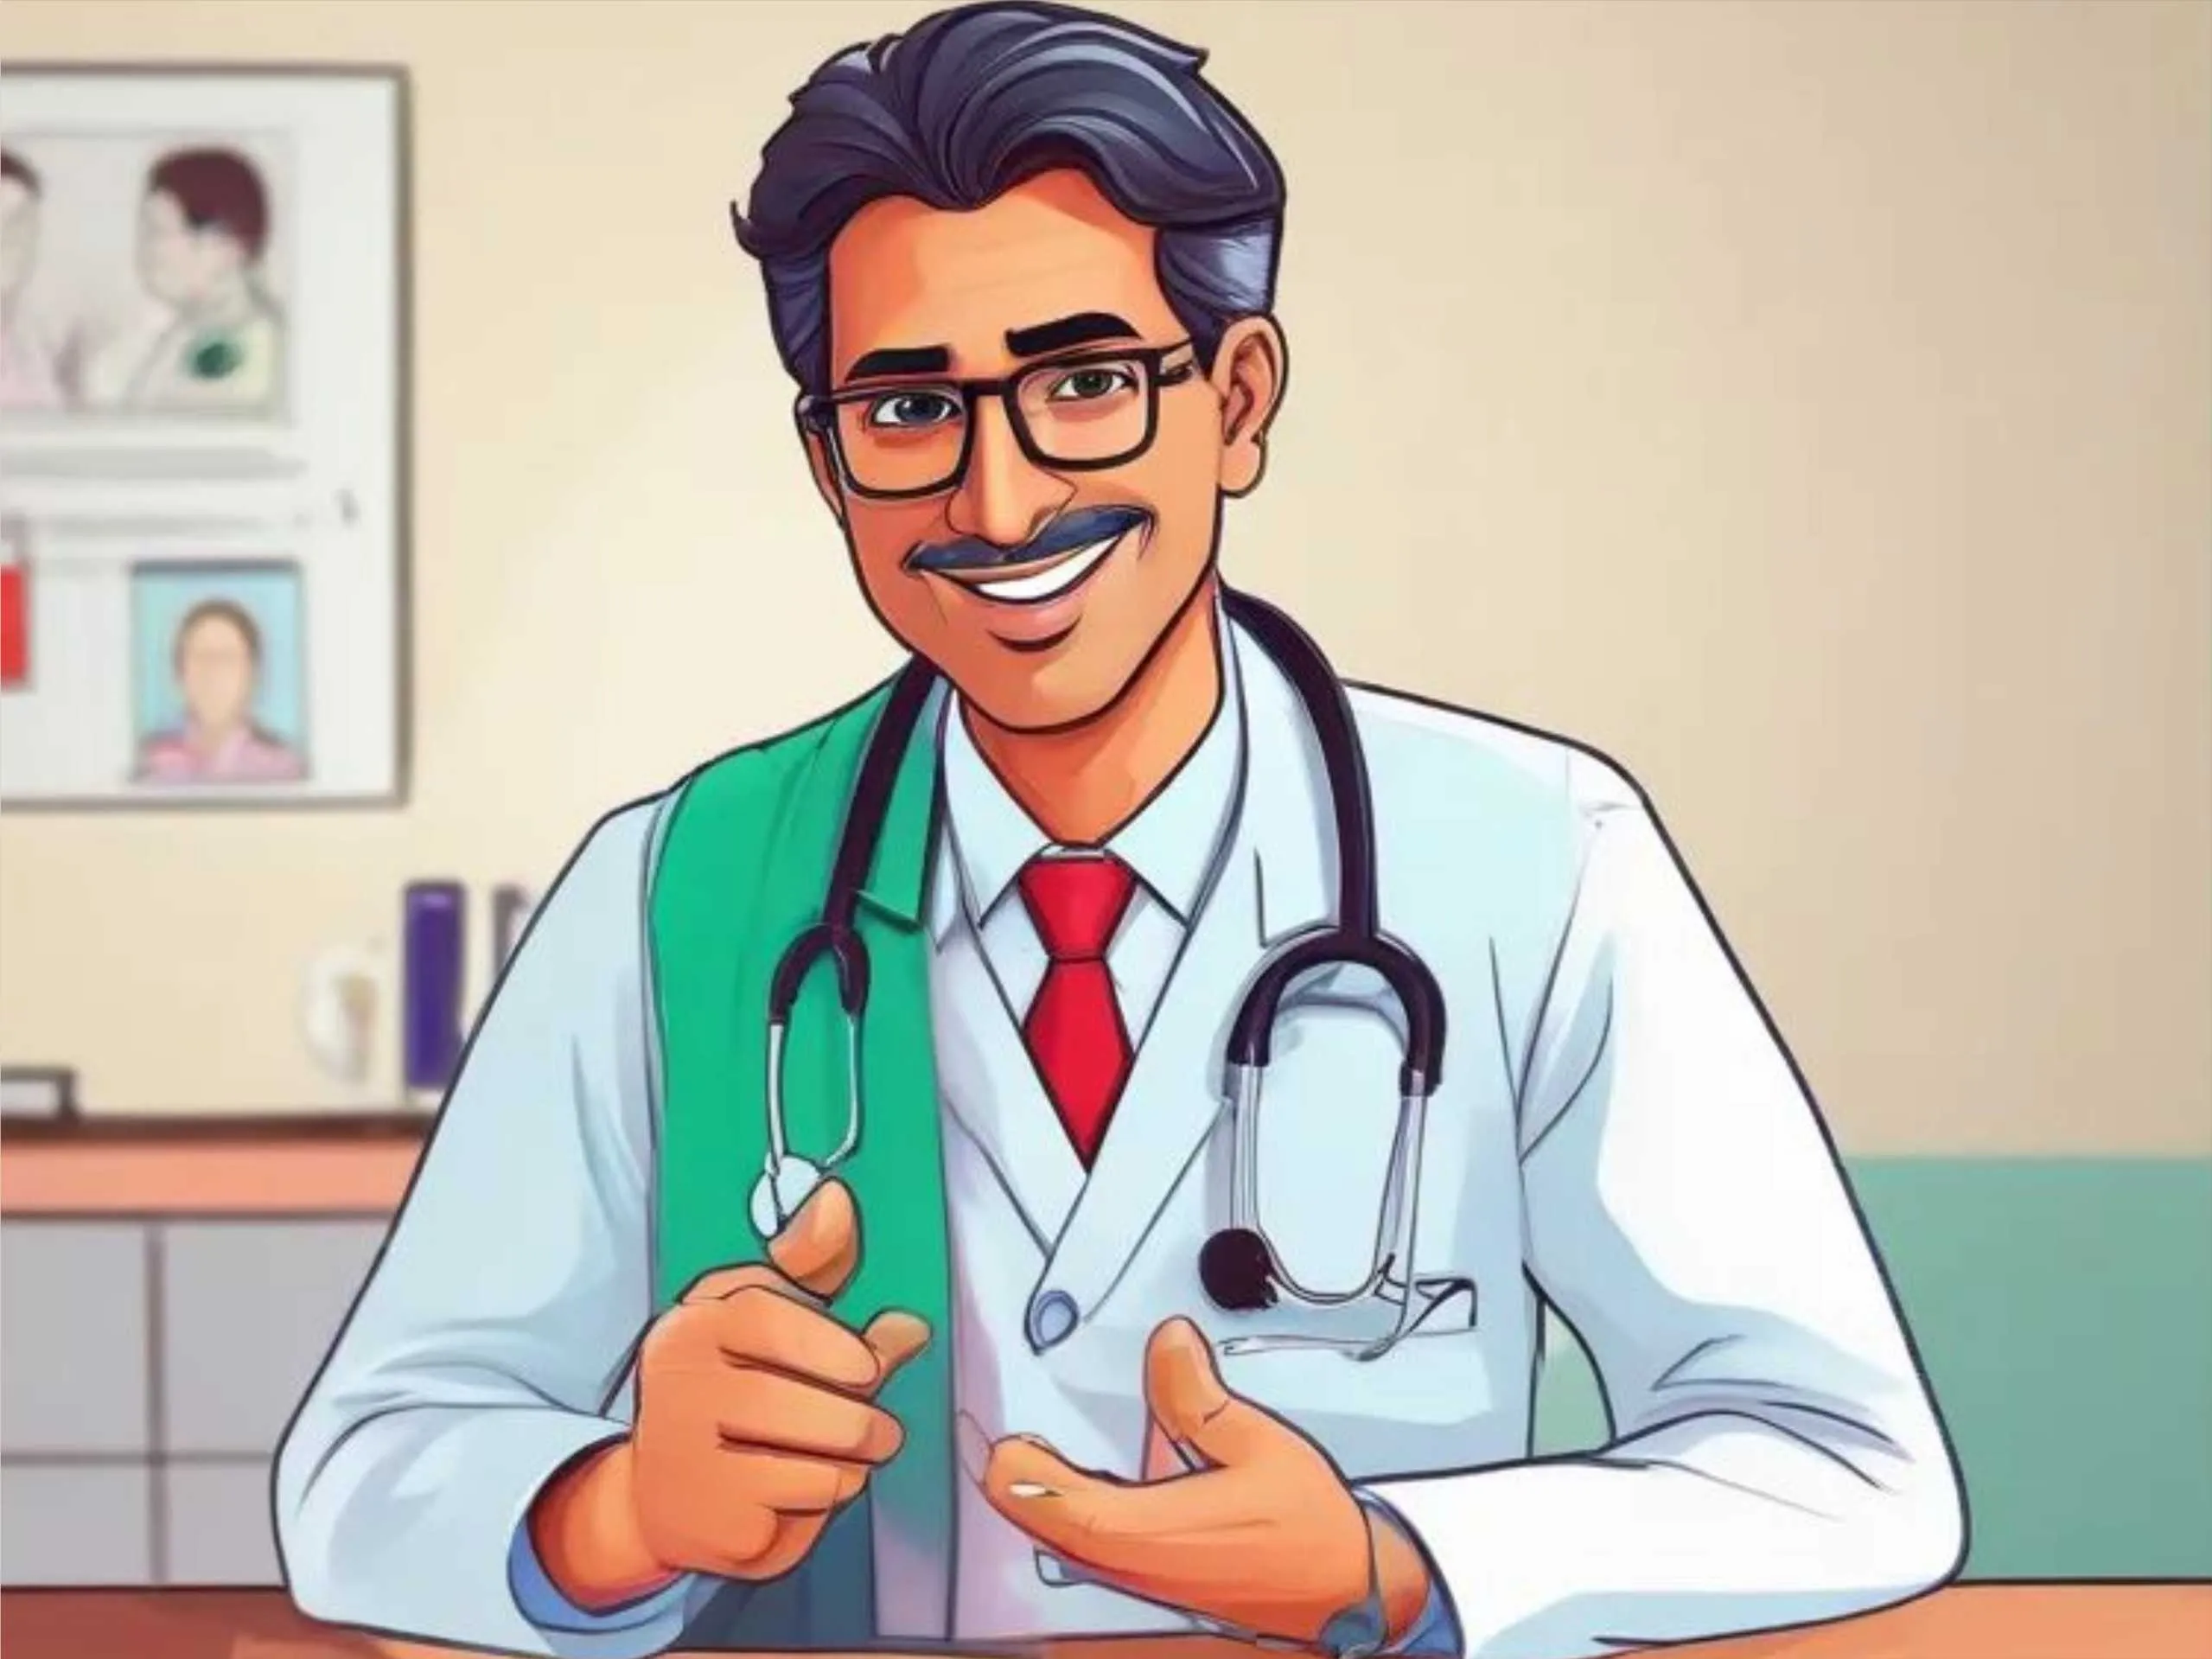 Cartoon image of a doctor 